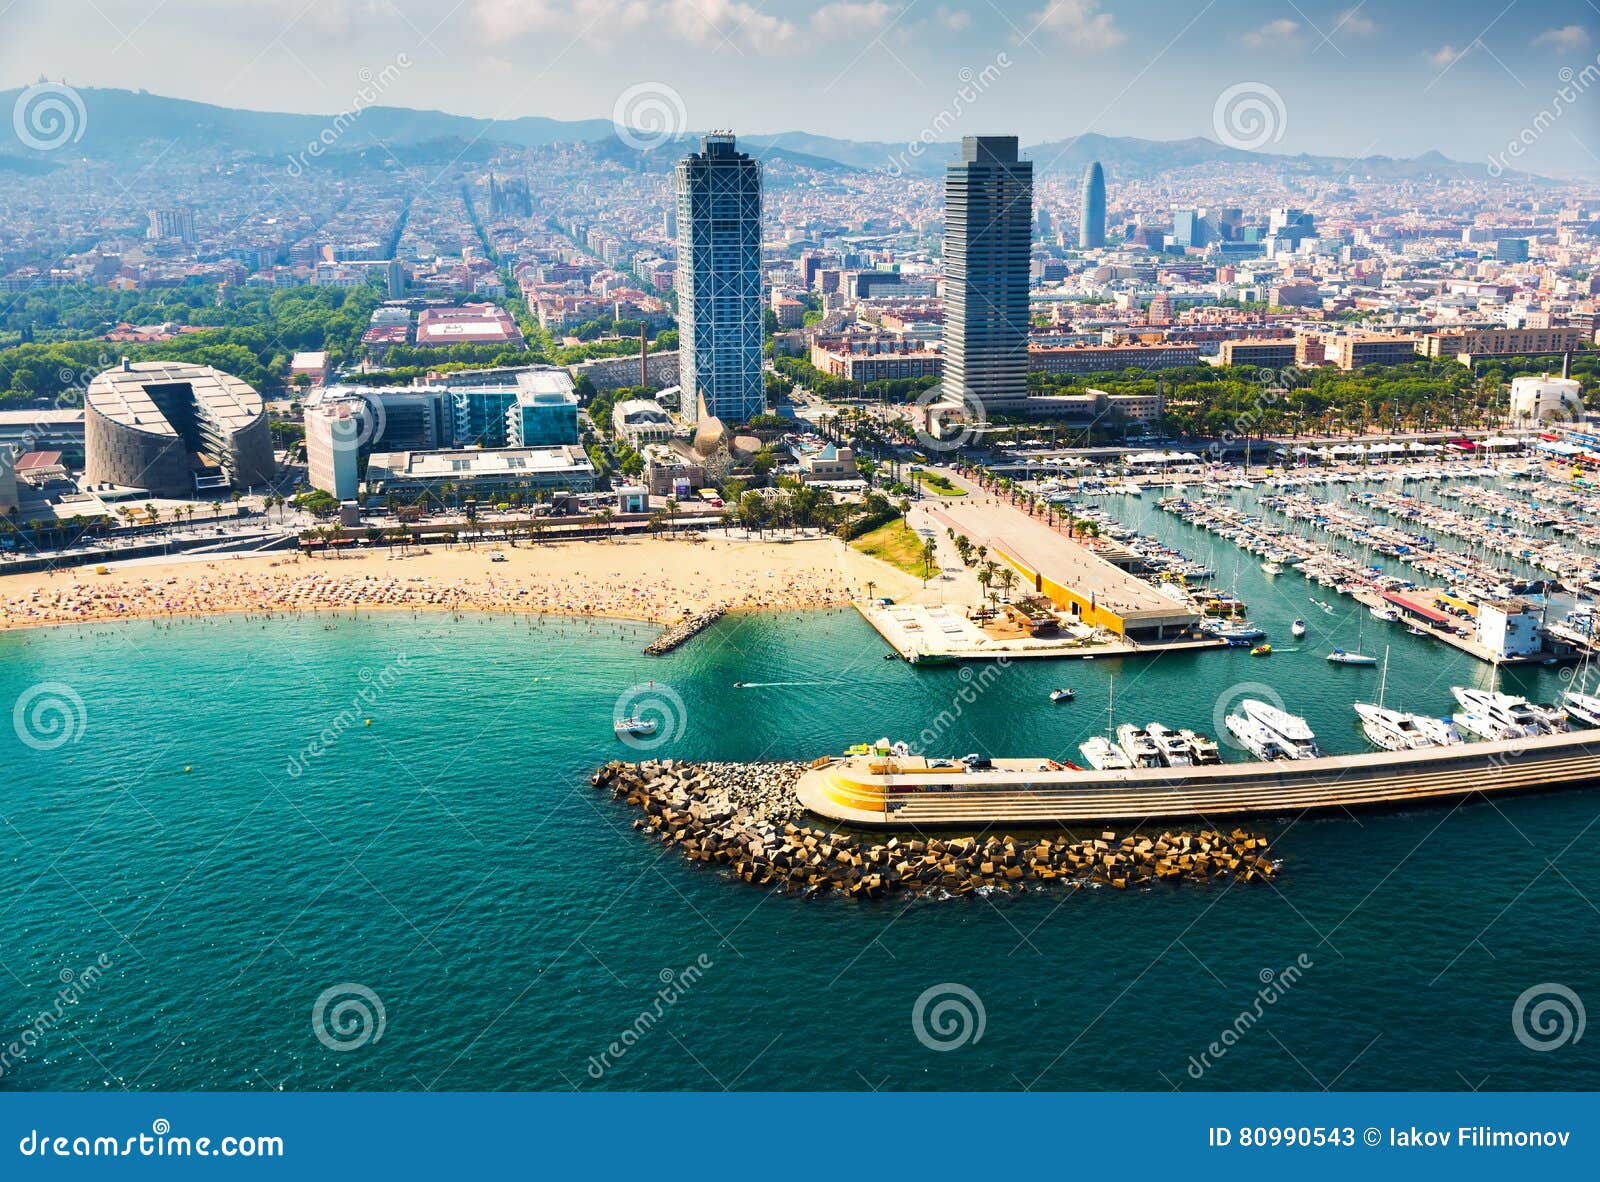 yachts docked in barcelona